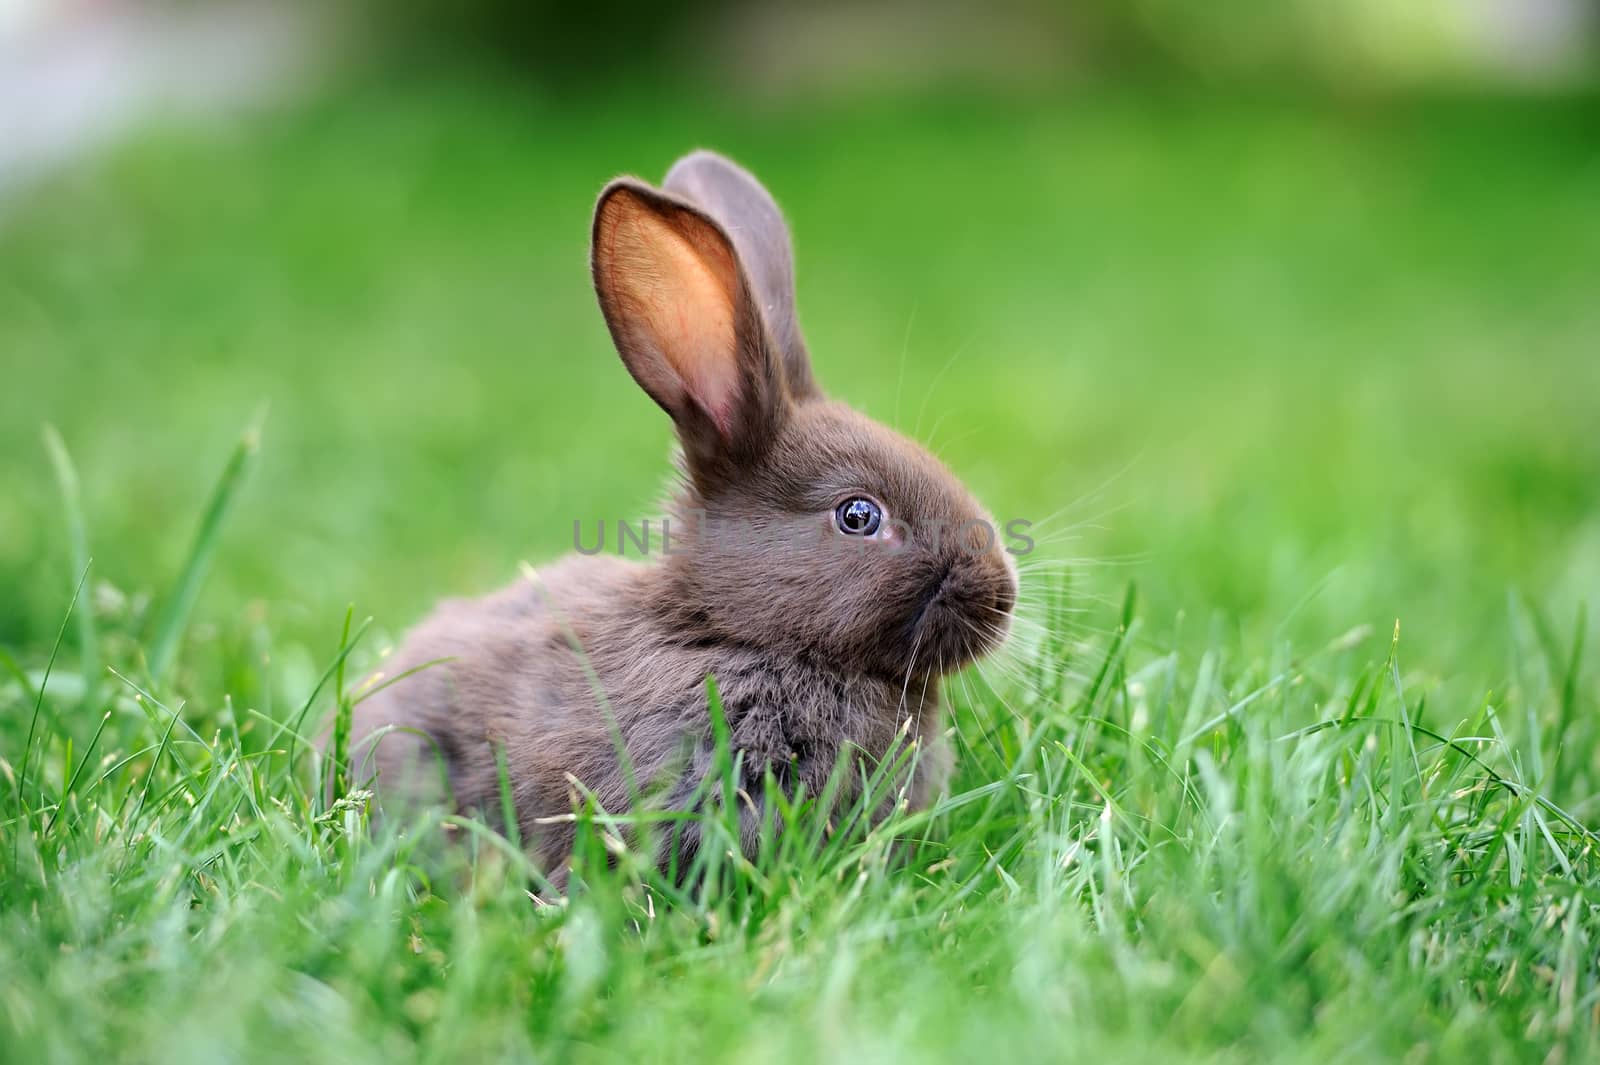 Rabbit in the grass by byrdyak